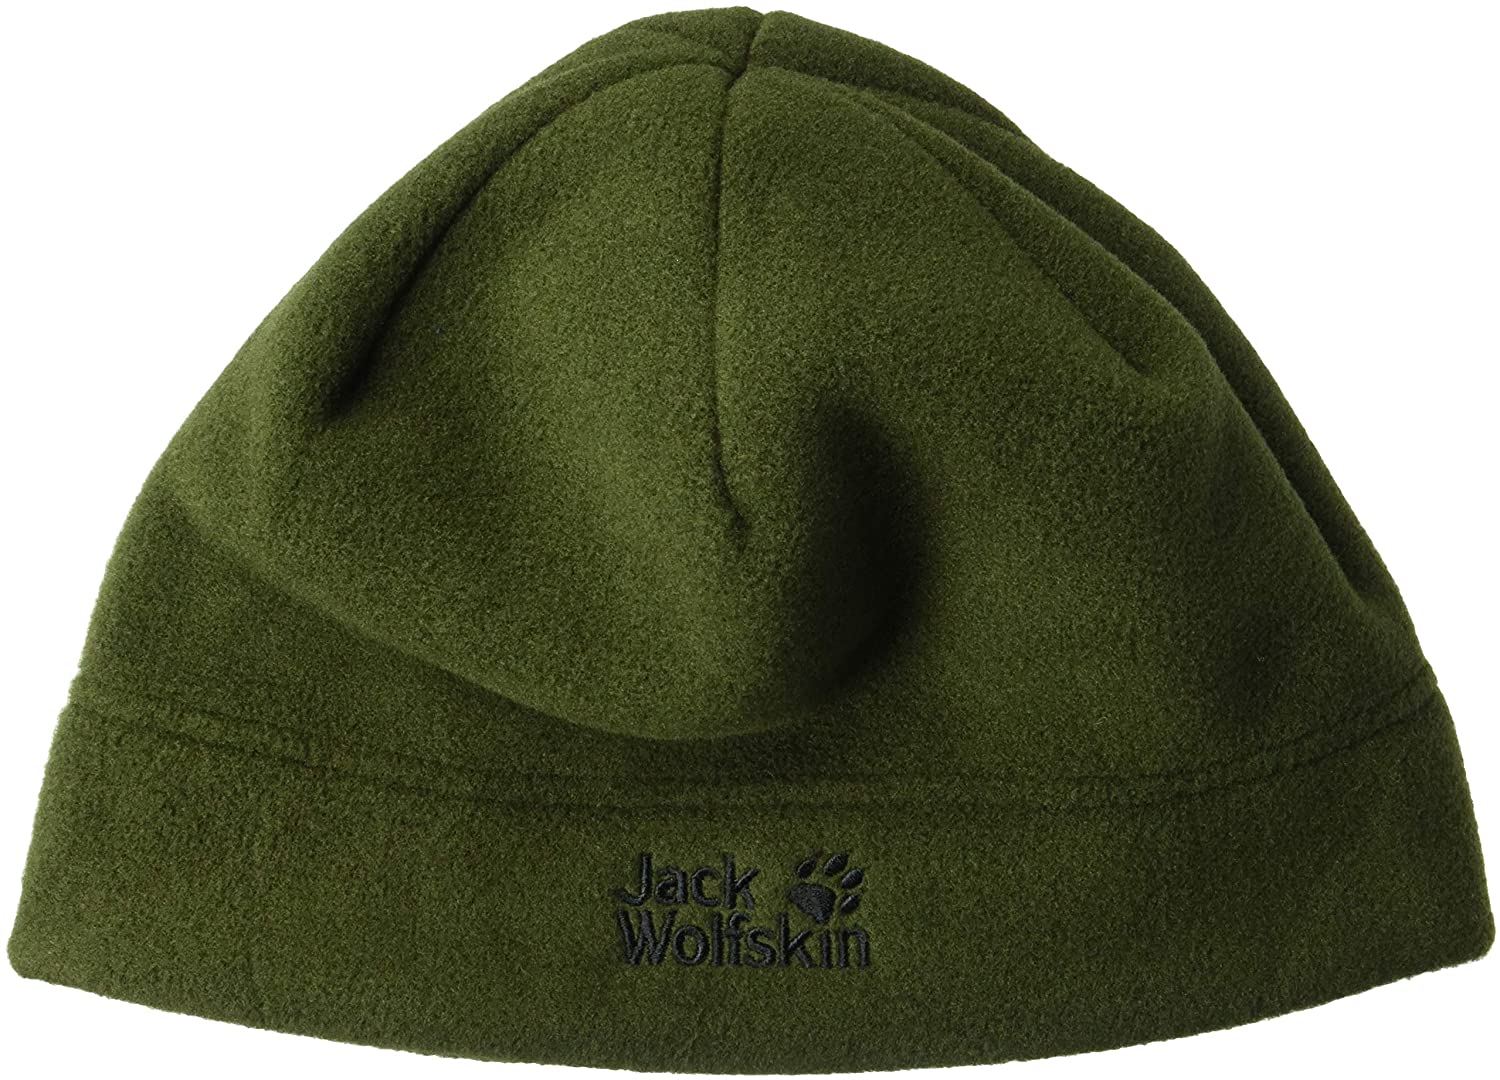 Jack Wolfskin 1901811 Vertigo Fleece Beanie Hat, Malachite